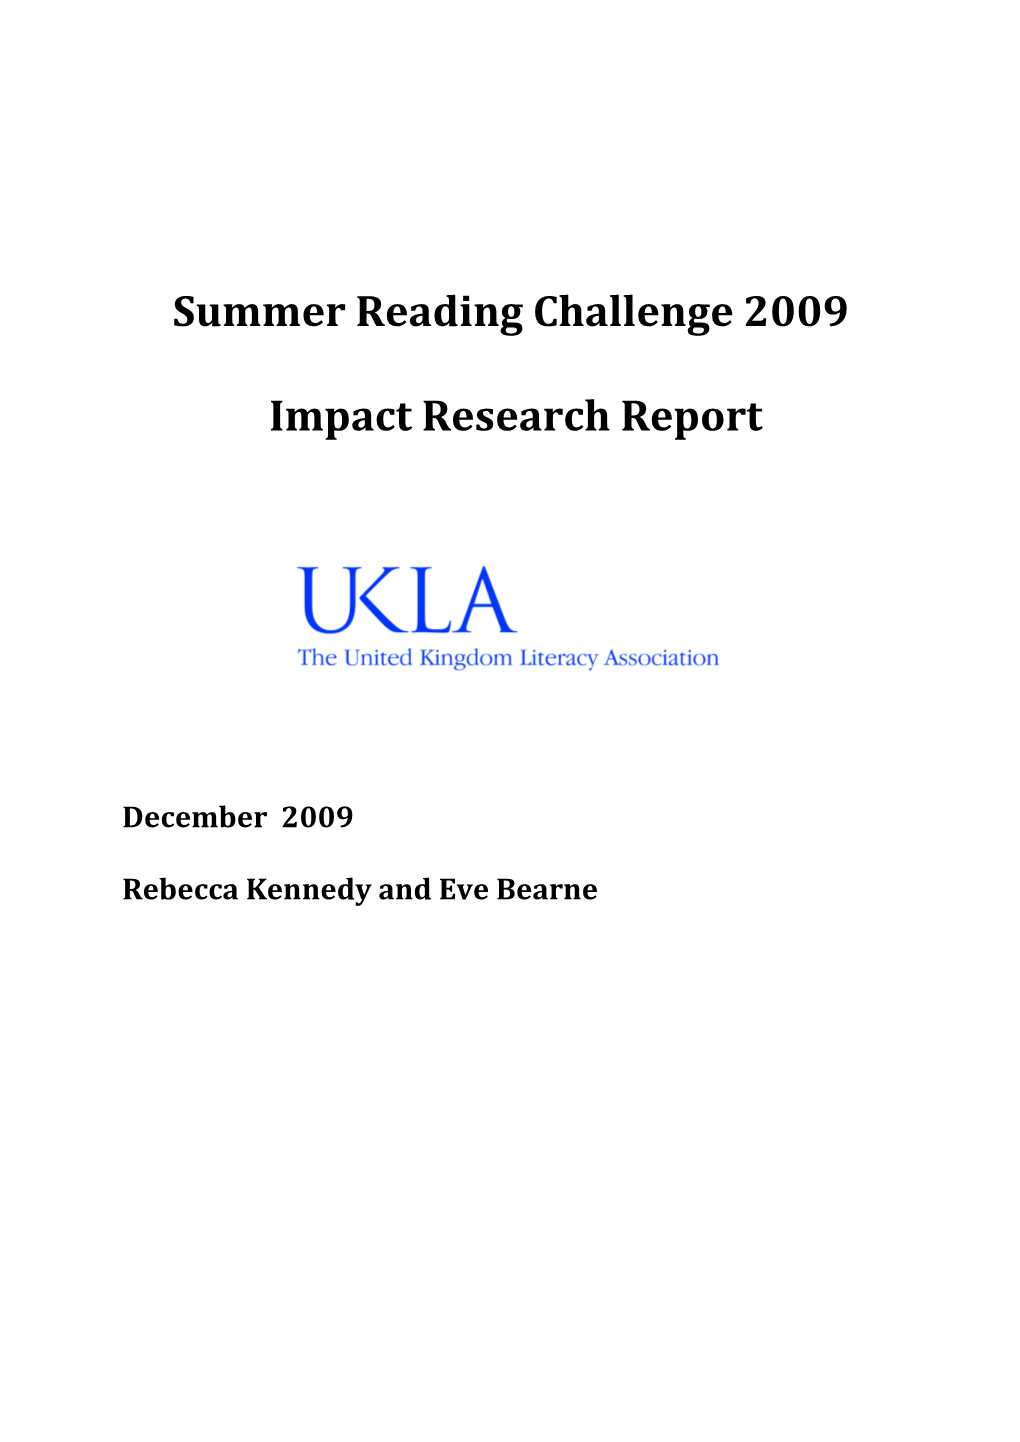 Summer Reading Challenge – Impact on Children's Reading